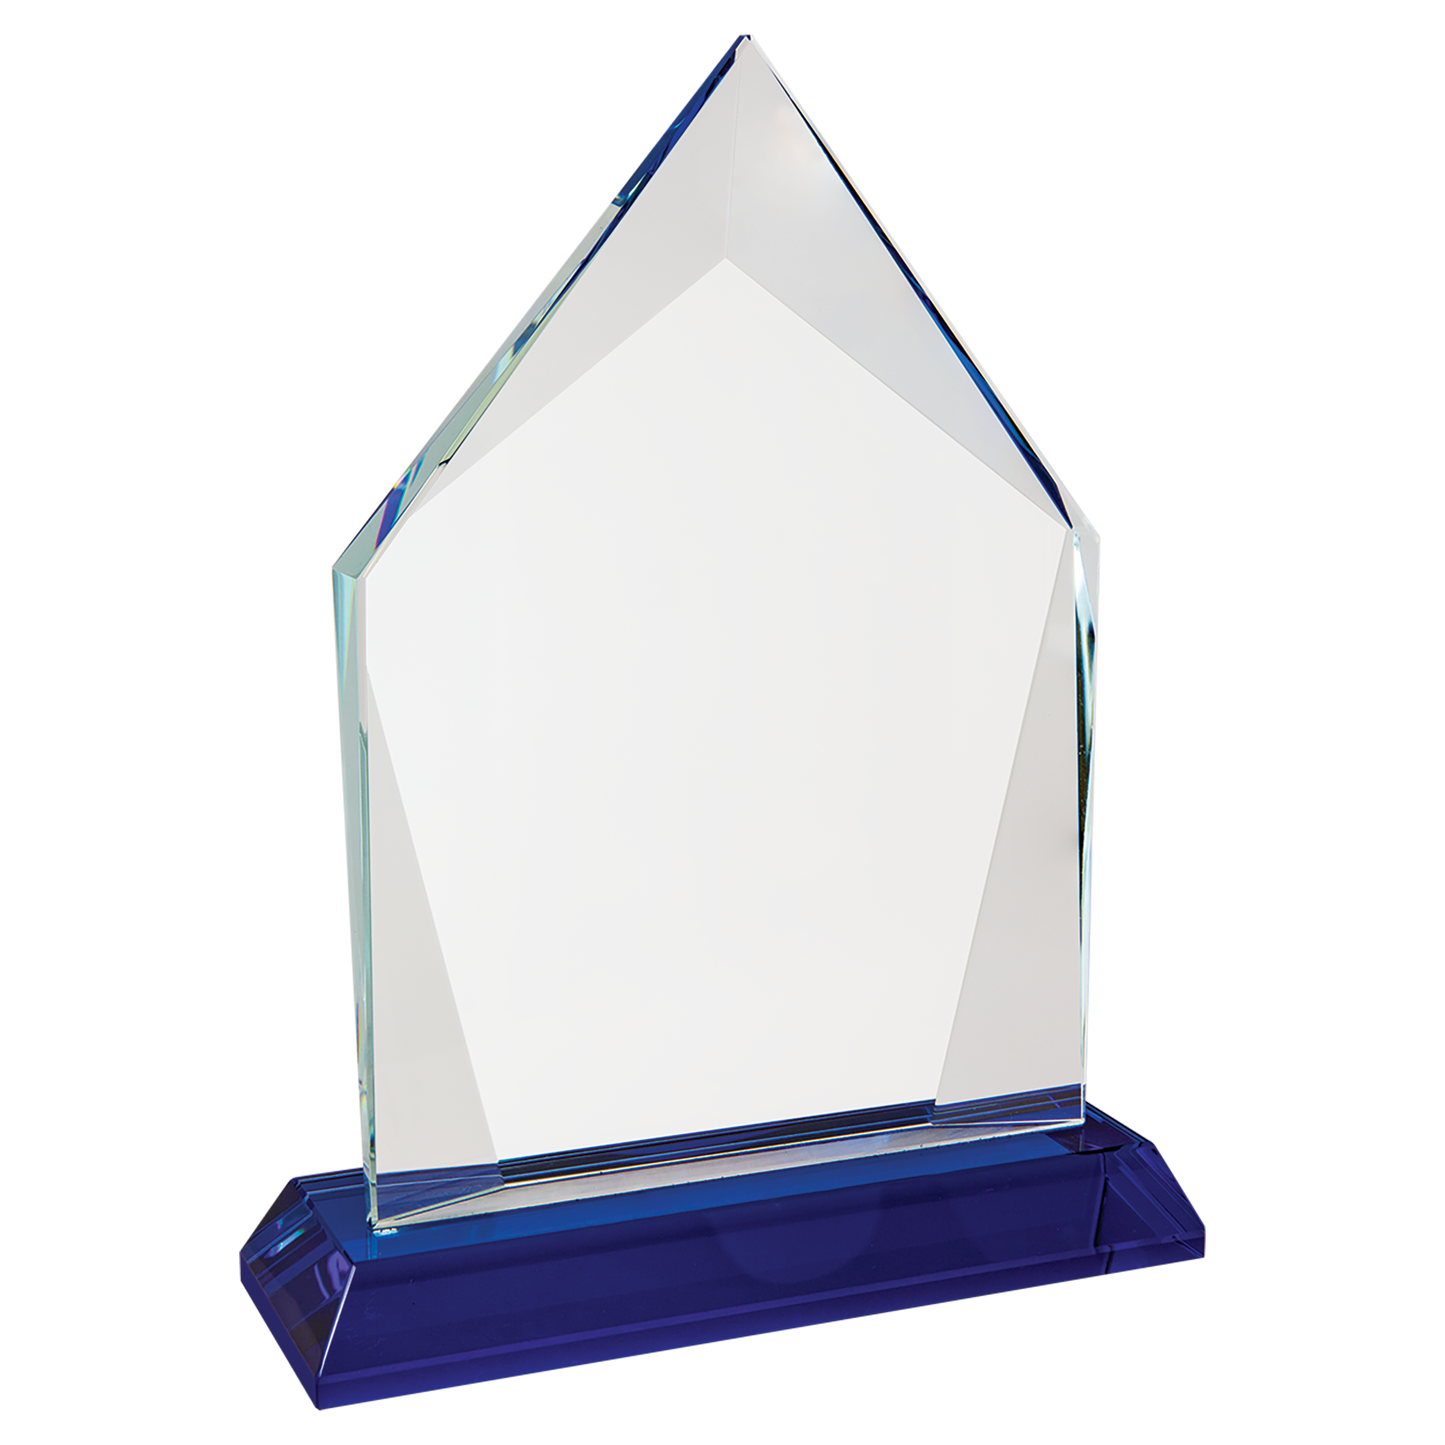 7 3/4" Diamond Halo Glass with Blue Base Corporate Awards - Glass Awards